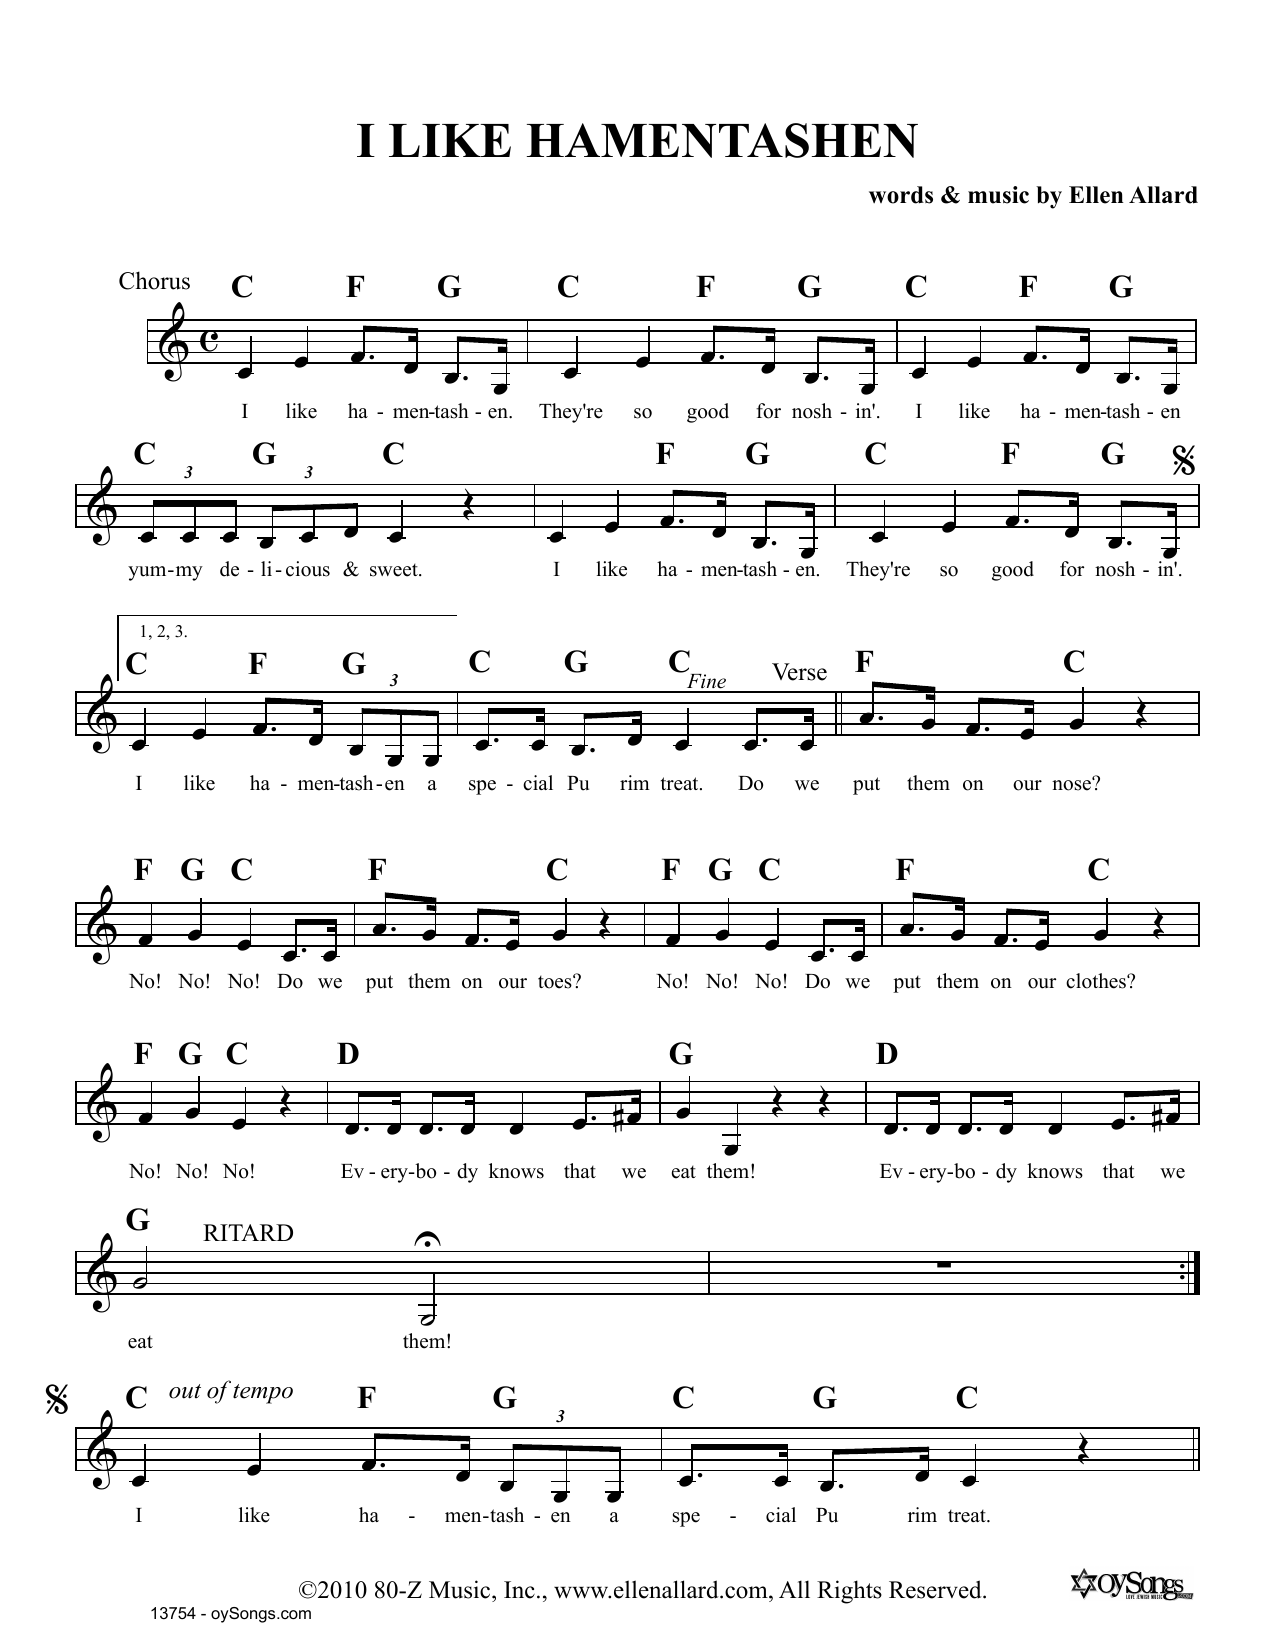 Download Ellen Allard I Like Hamentashen Sheet Music and learn how to play Melody Line, Lyrics & Chords PDF digital score in minutes